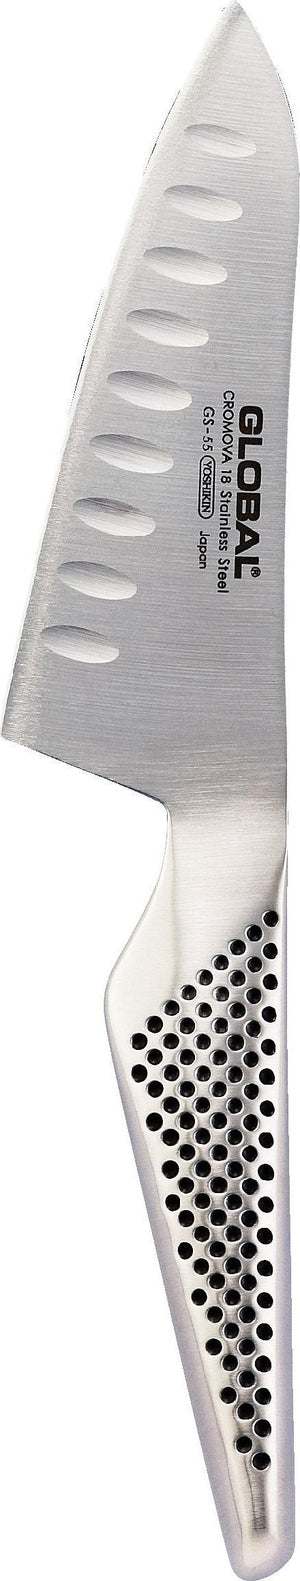 Global - GS Series 4.75" Stainless Steel Fluted Santoku Knife (12 cm) - GS55